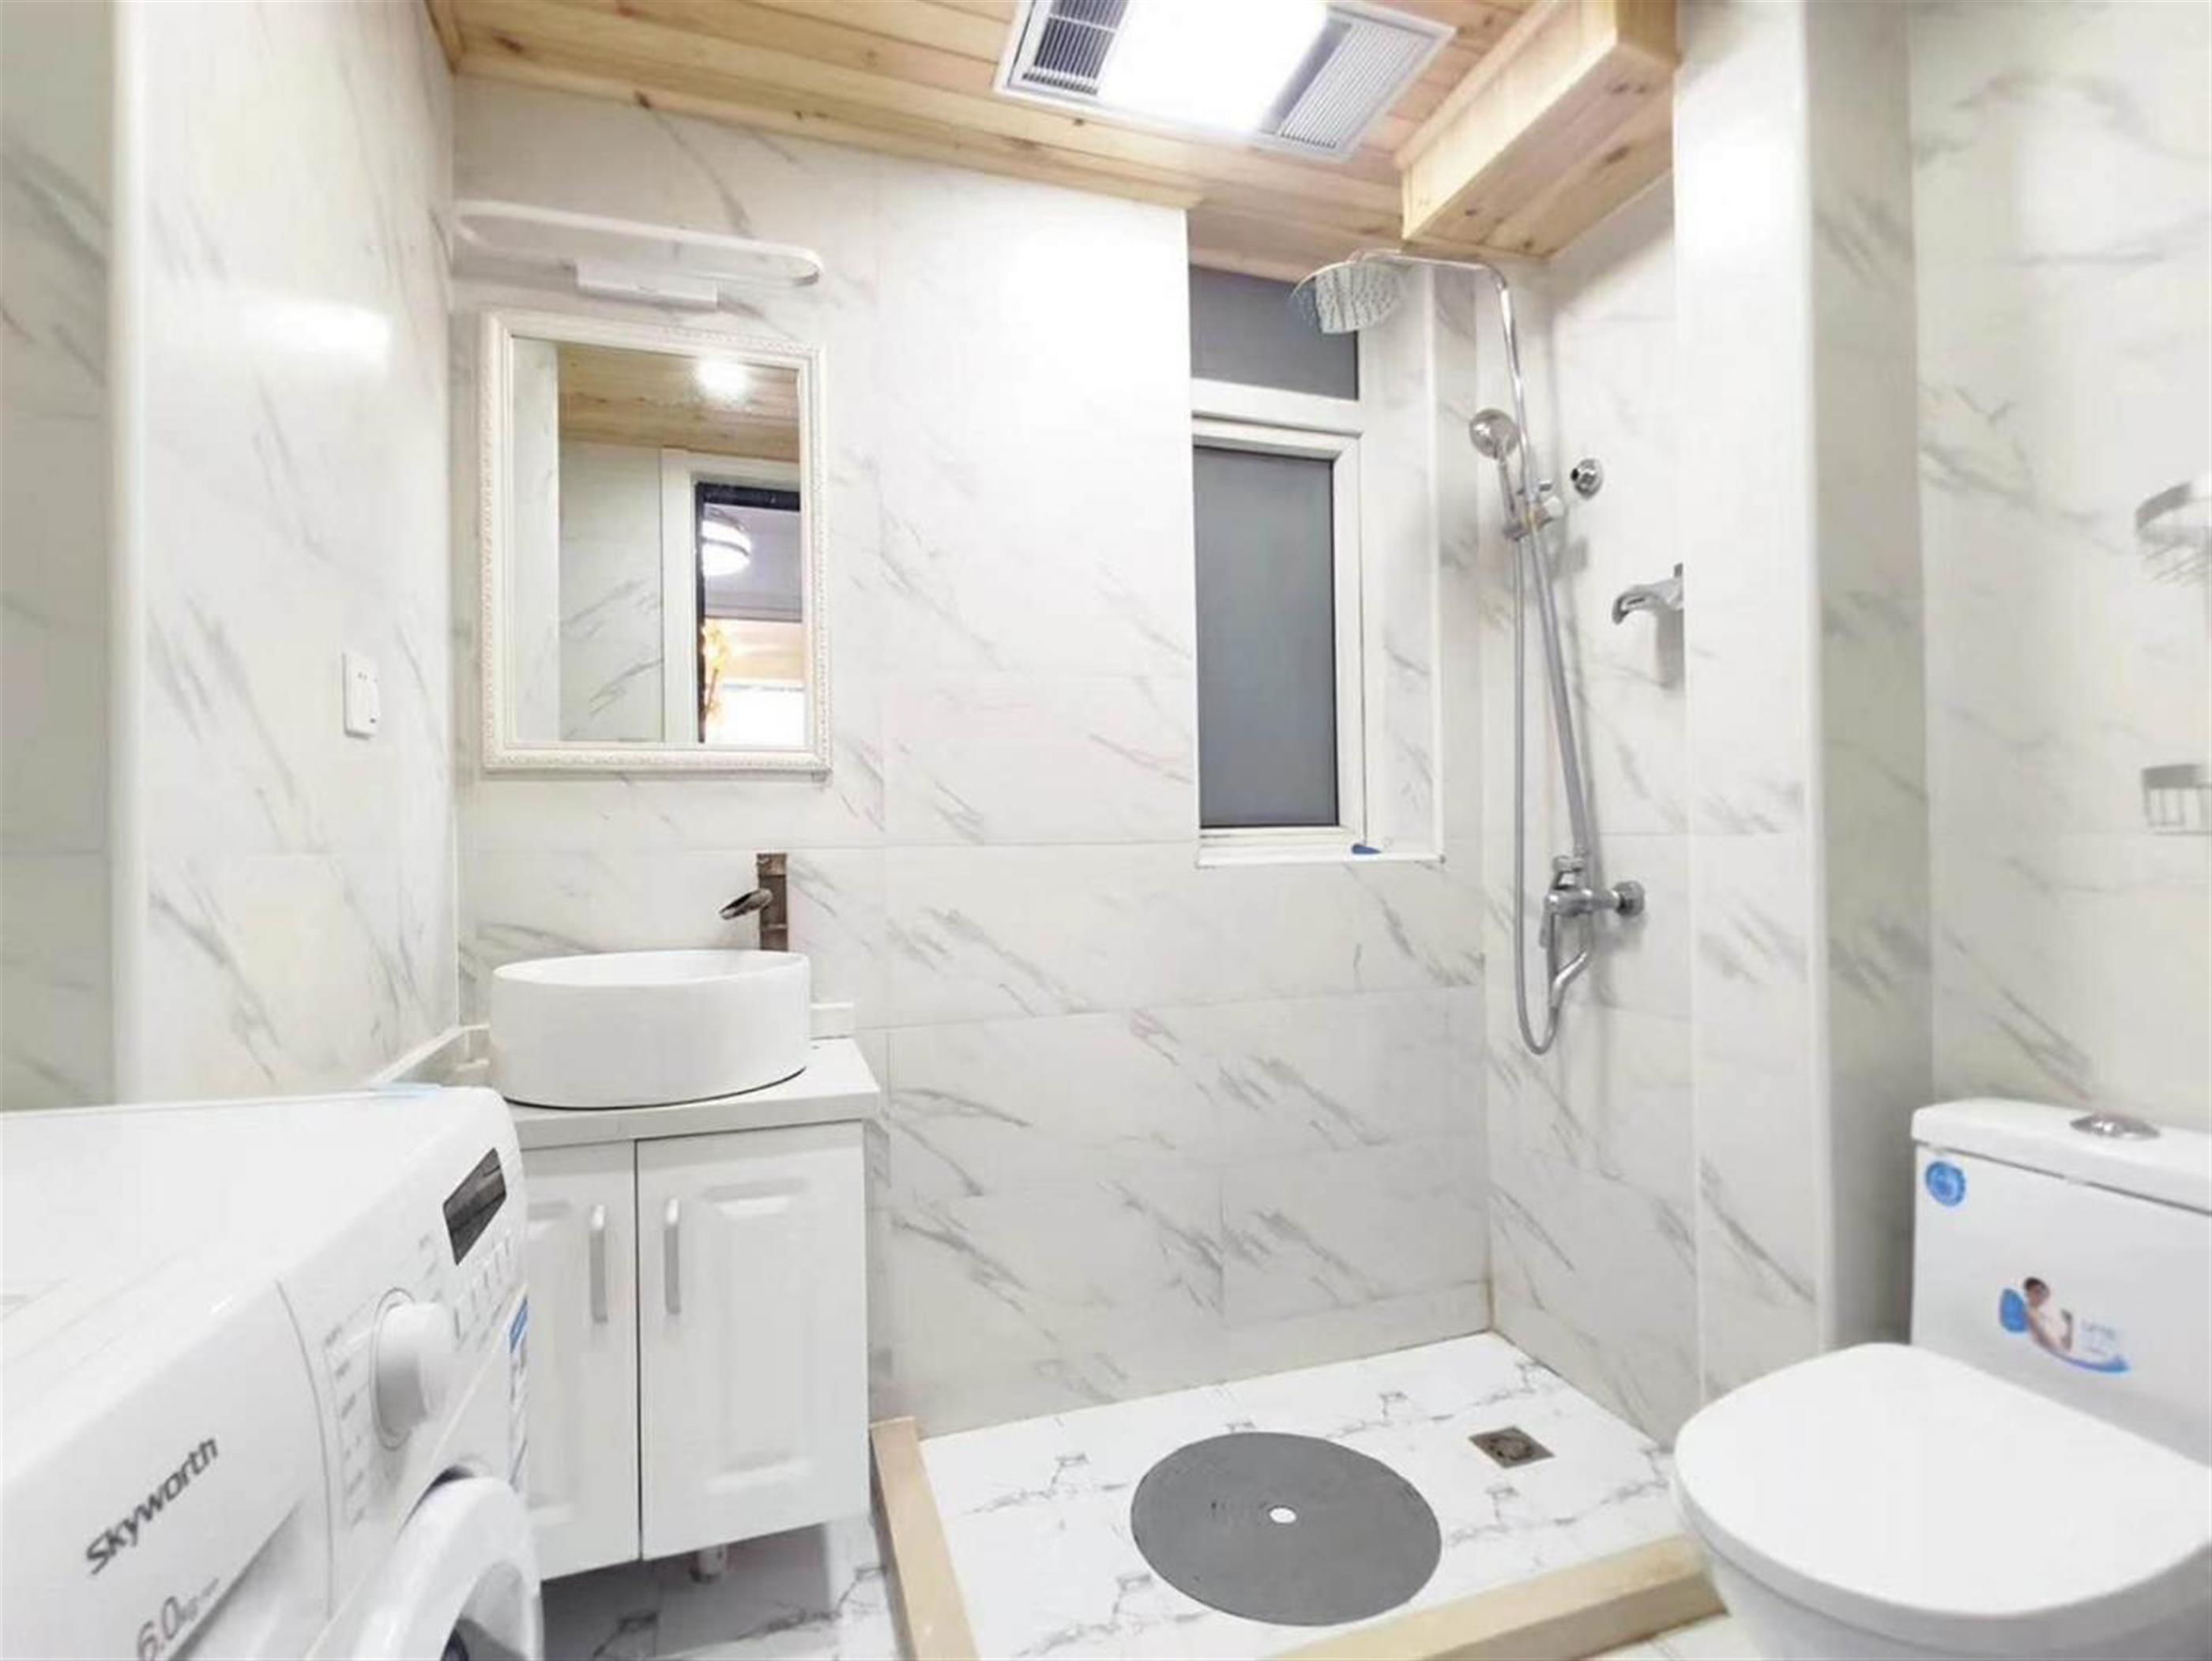 new bathroom Renovated Affordable Cozy 50sqm Xinhua Road Apt nr LN 3/4/10 for Rent in Shanghai